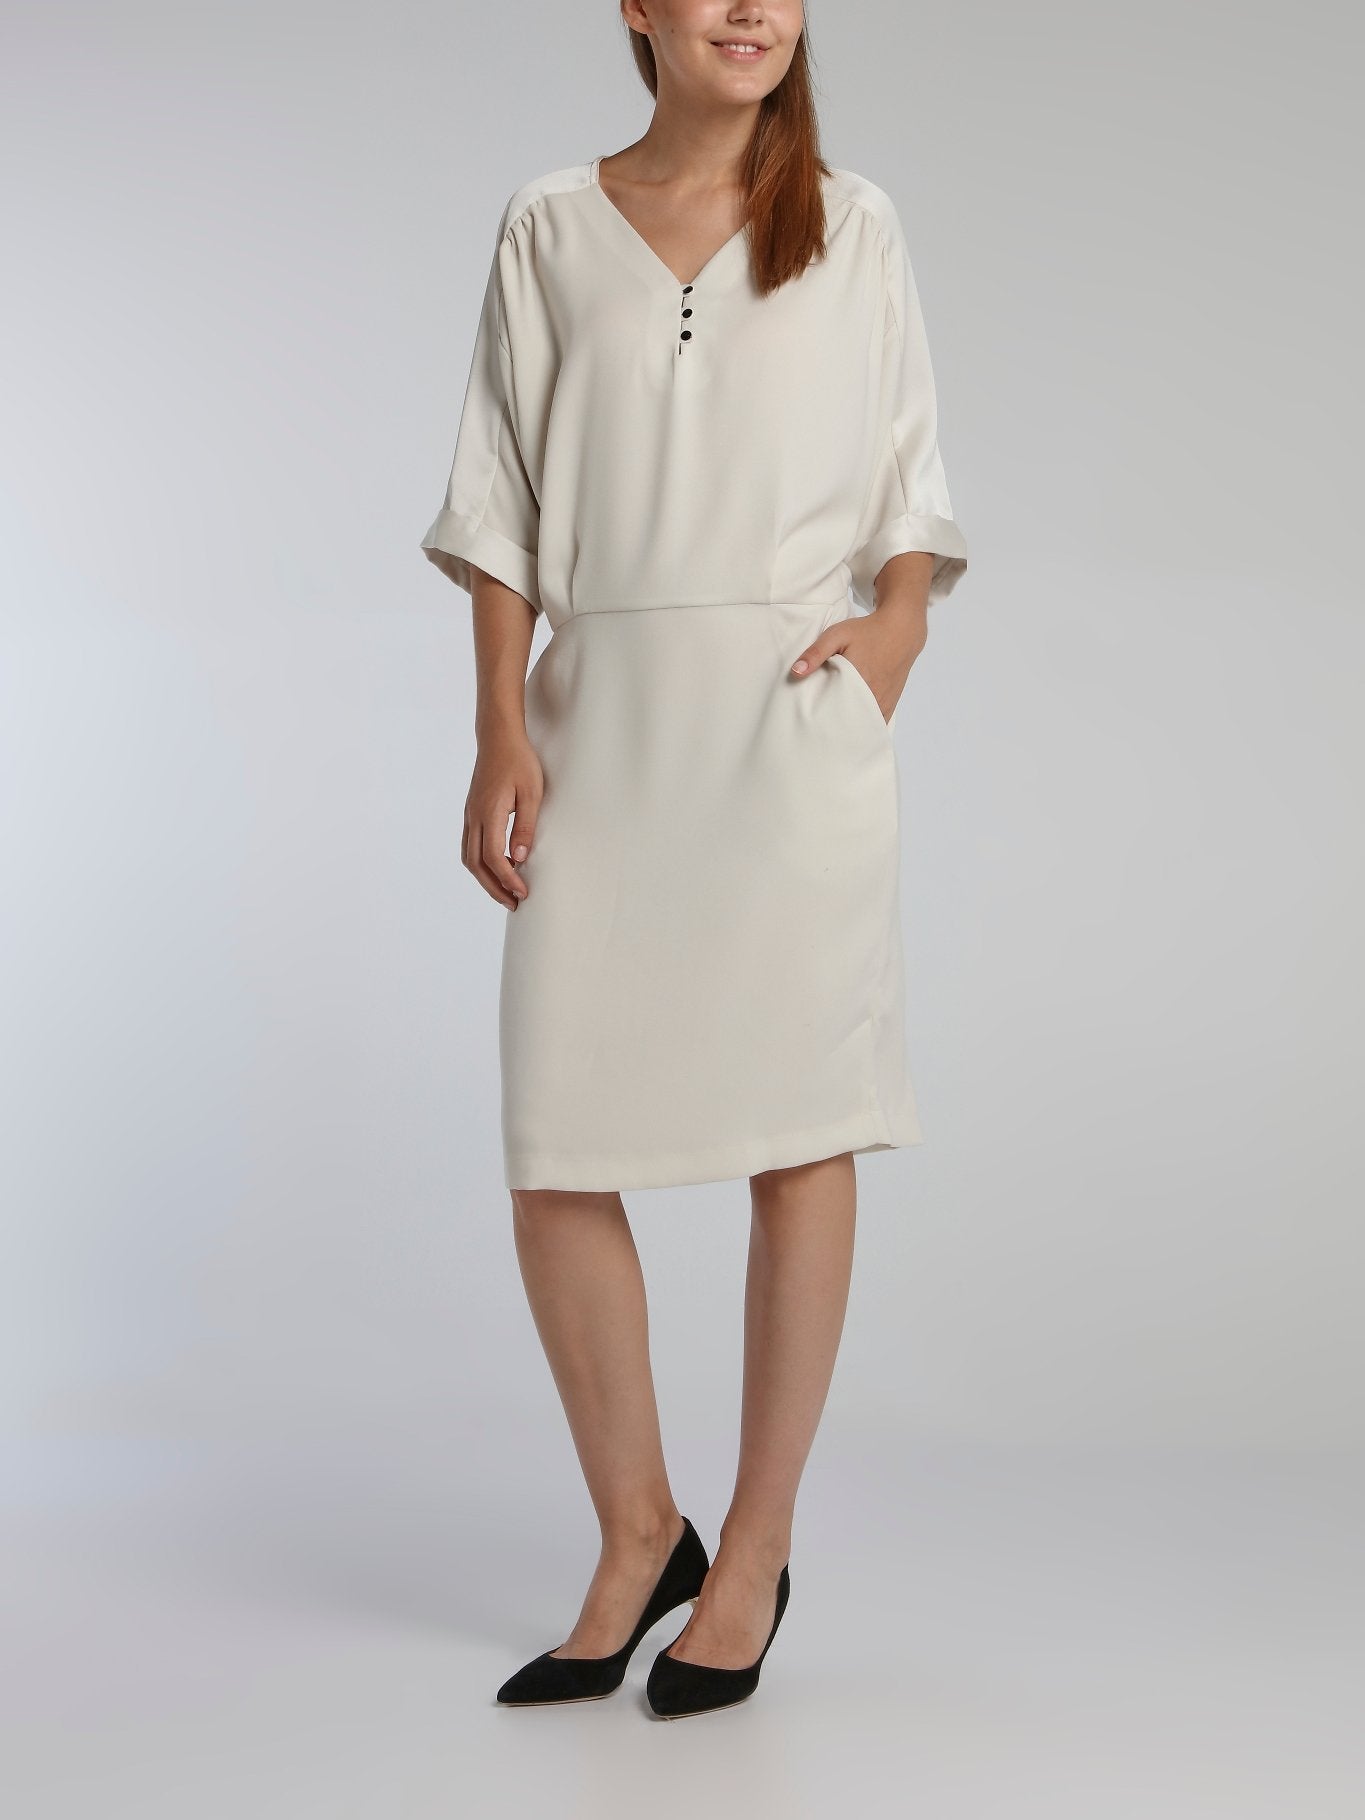 Vampas White Three-Quarter Sleeve Dress